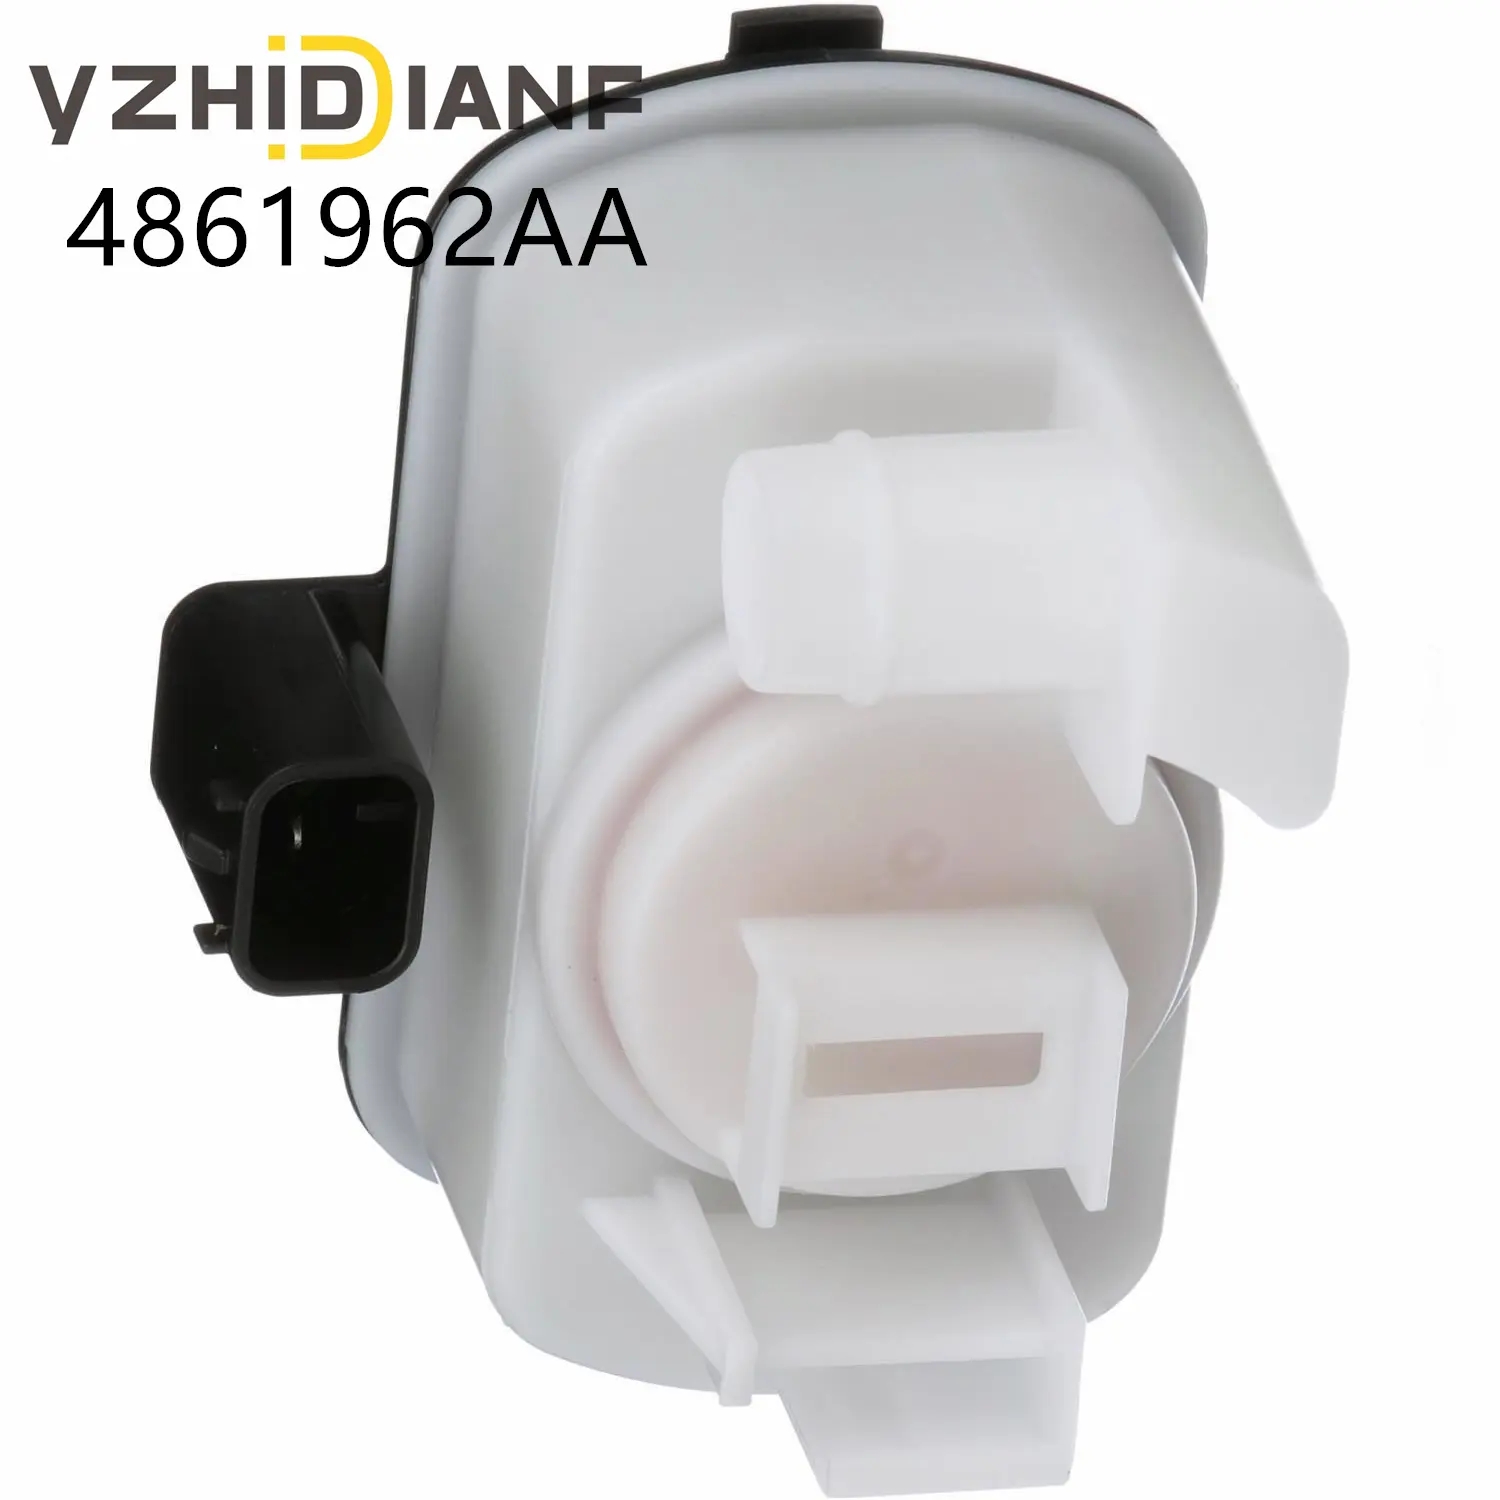 Standard Motor Products LDP14 4861962AA Fuel Vapor Leak Detection Pump Evaporative Emissions System